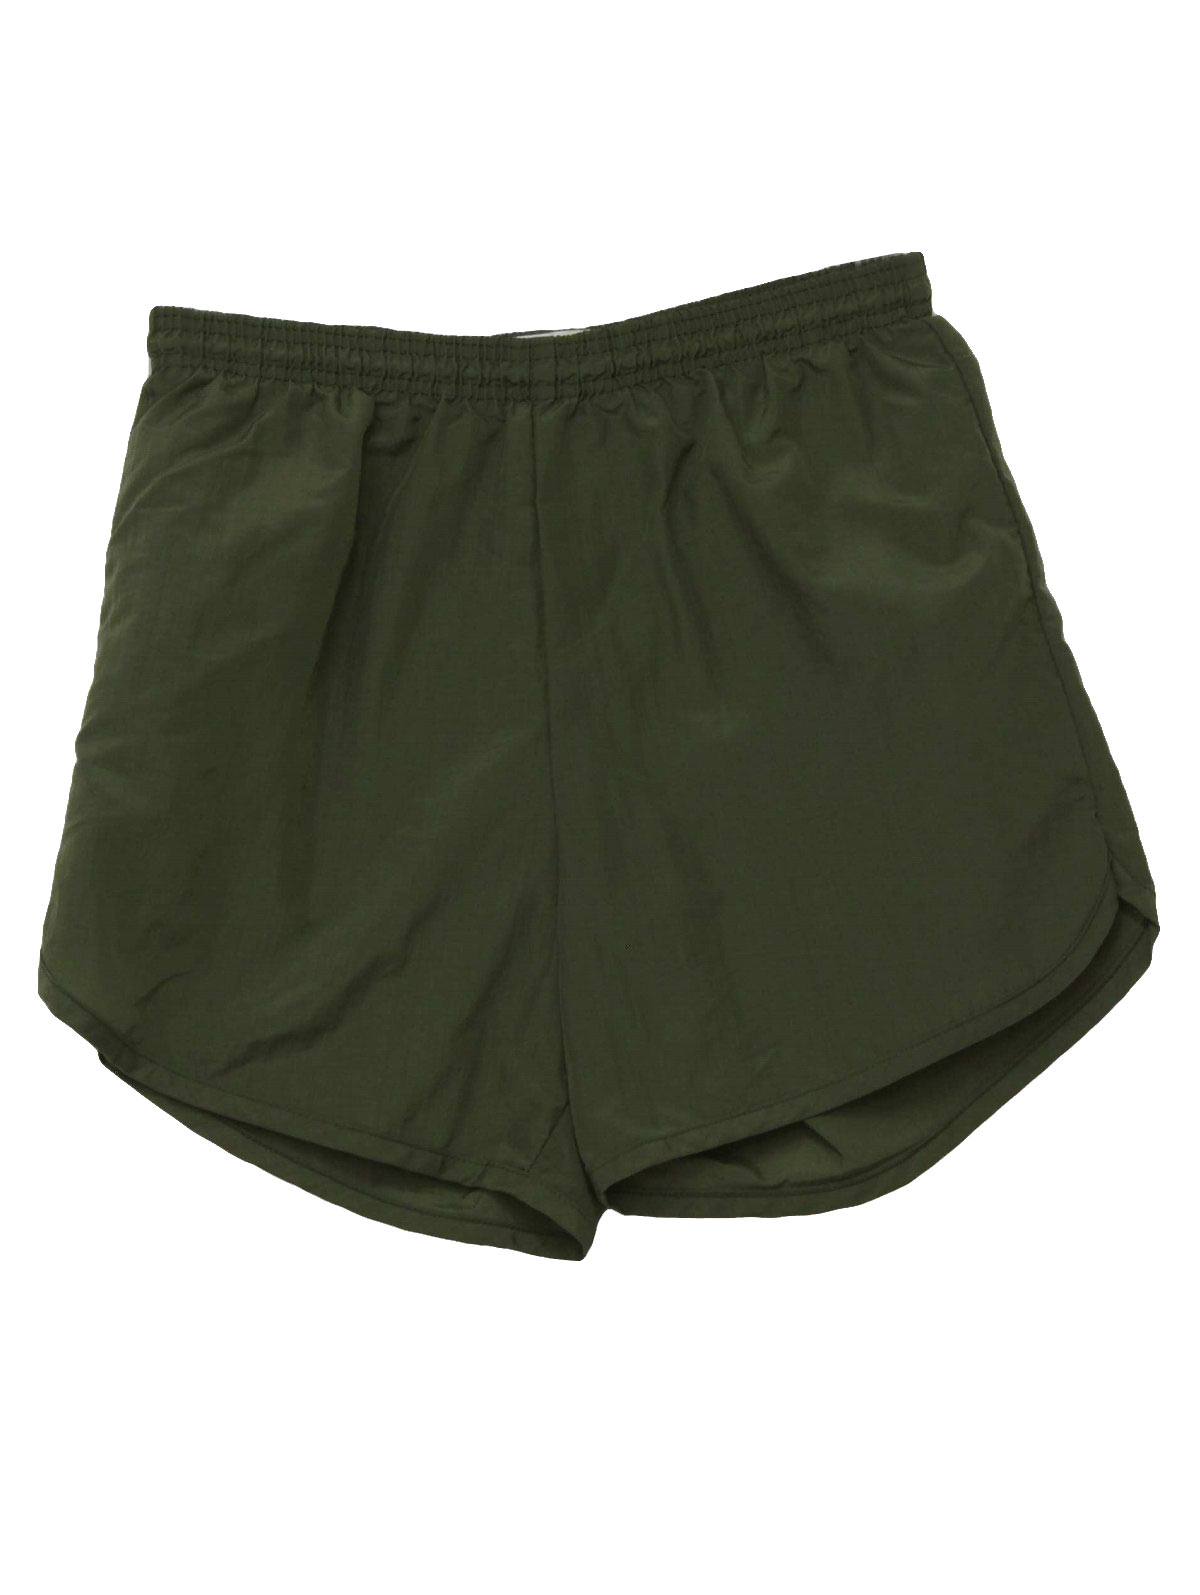 1990's Retro Shorts: 90s -Soffe- Mens army green nylon, brief lined ...